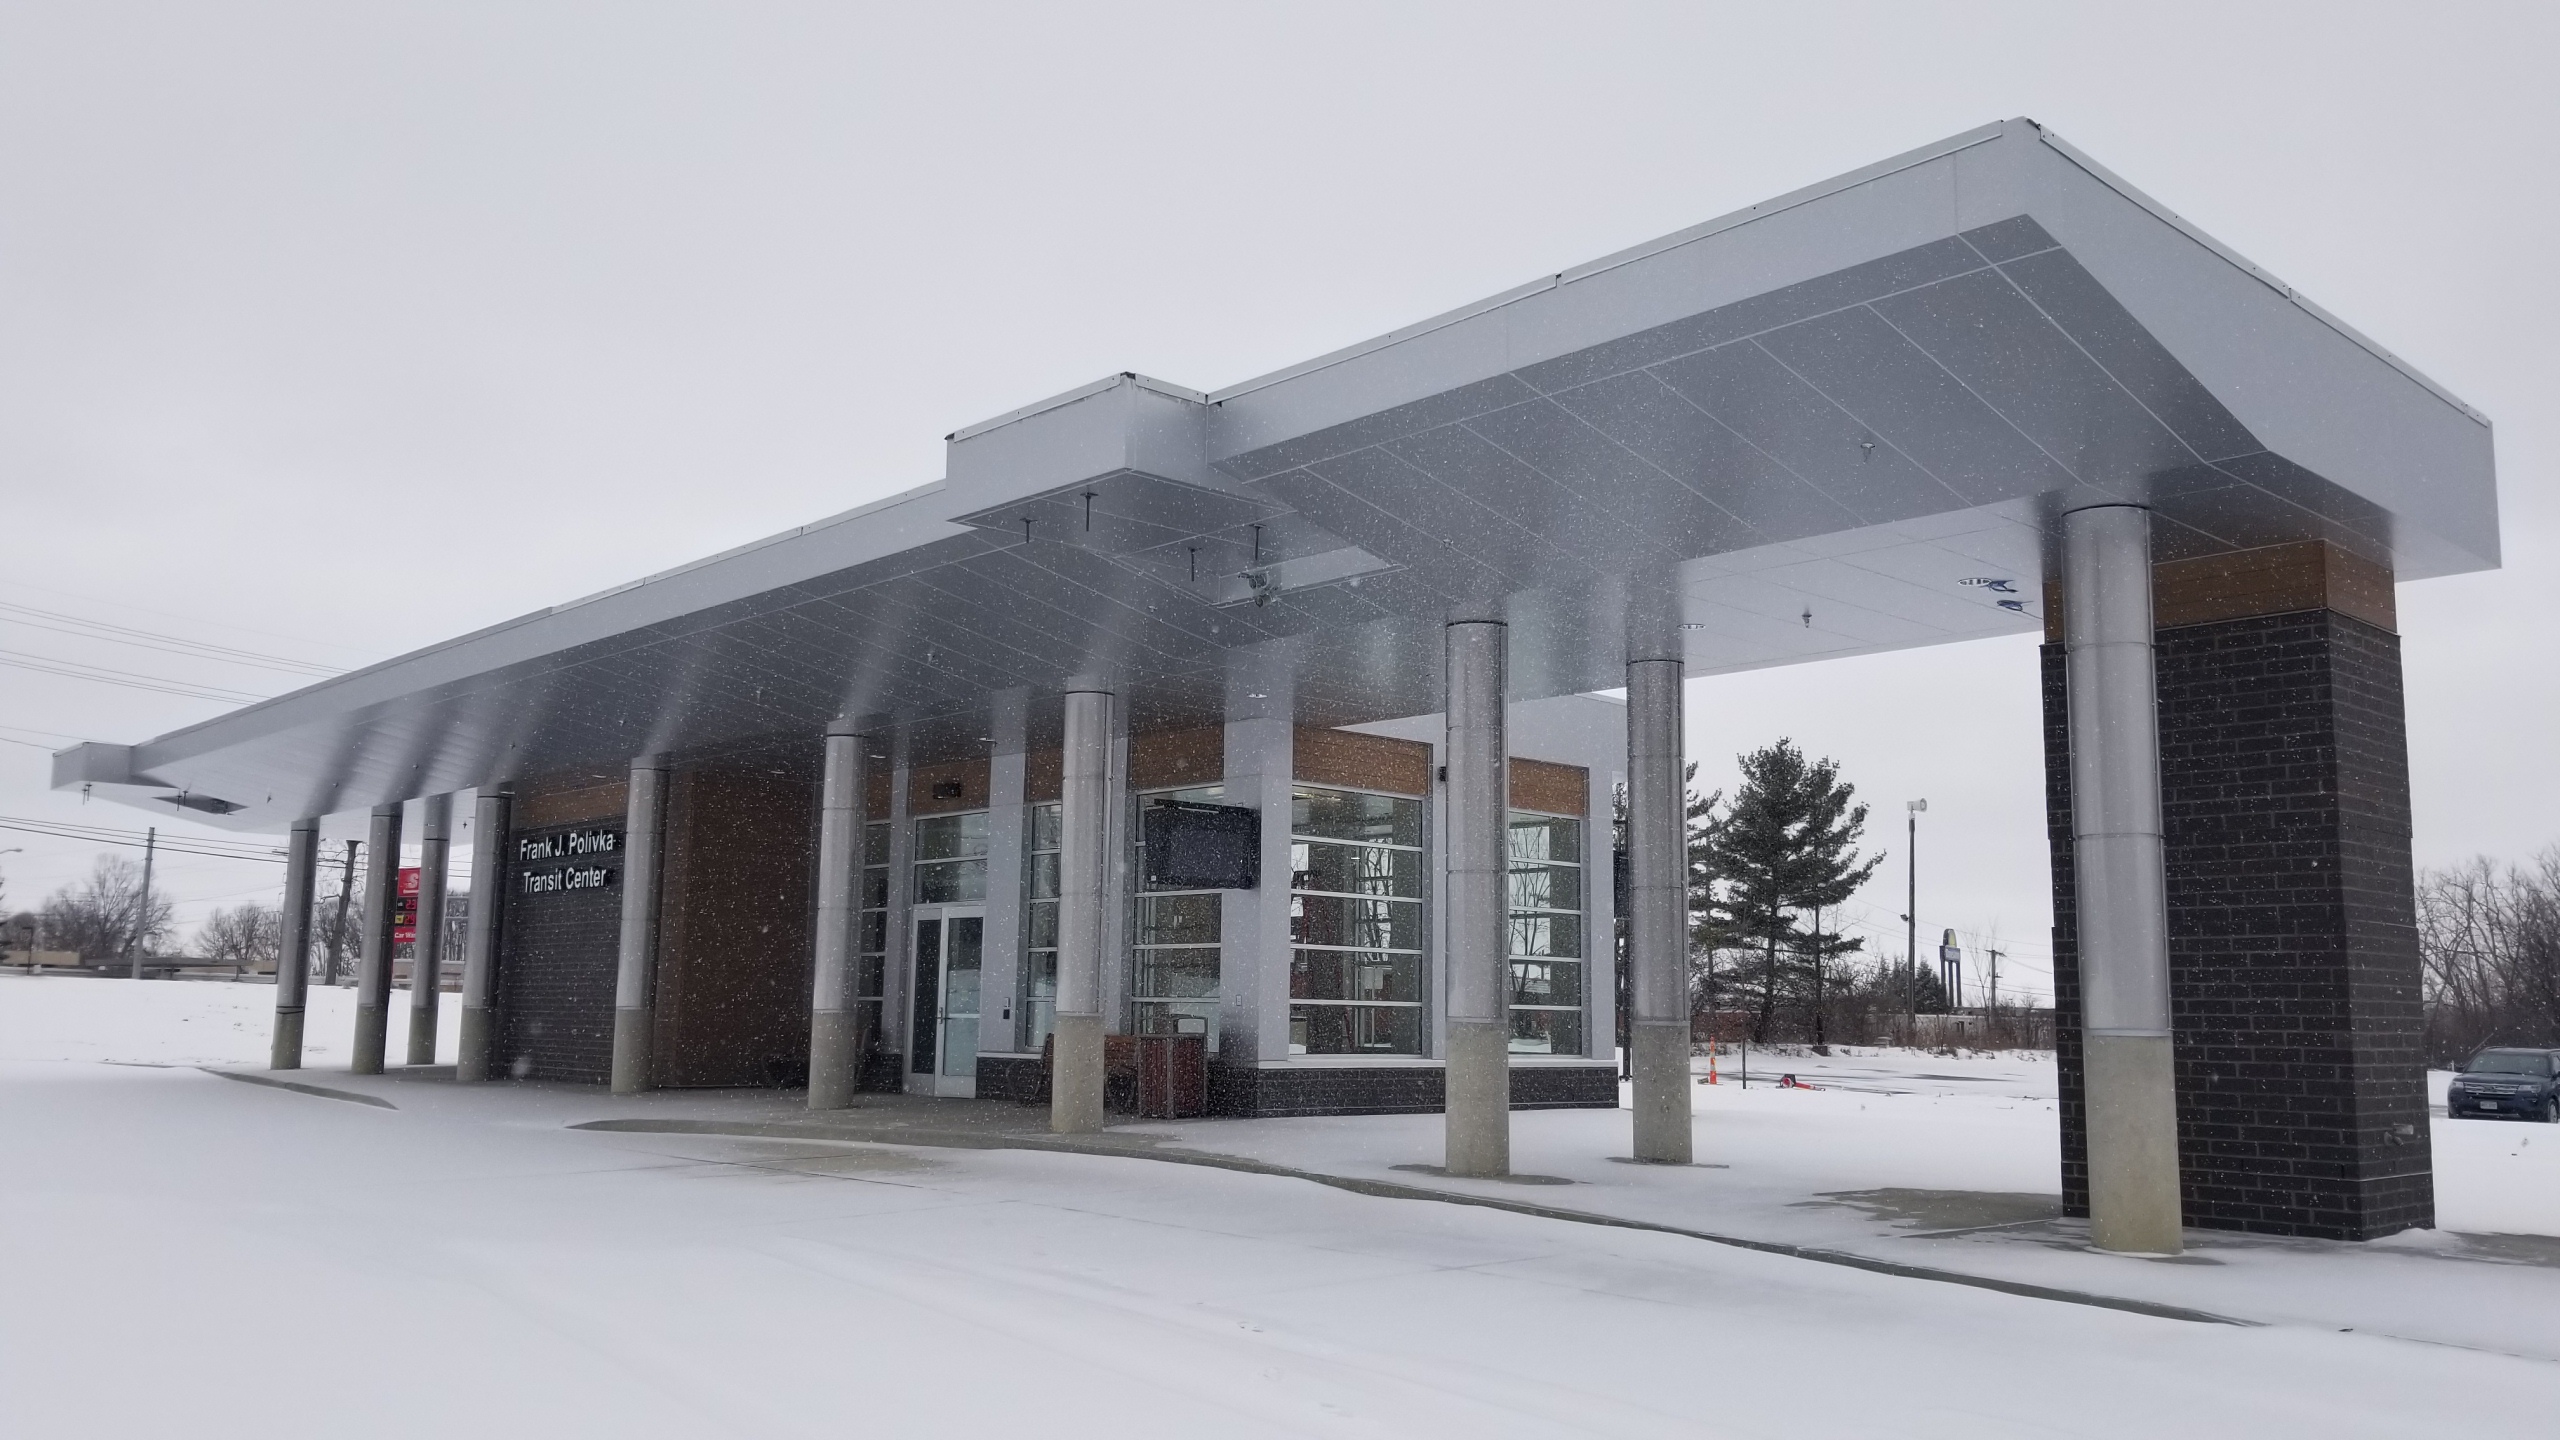 Frank J. Polivka Laketran Transit Center at Lakeland Community College will open on March 15